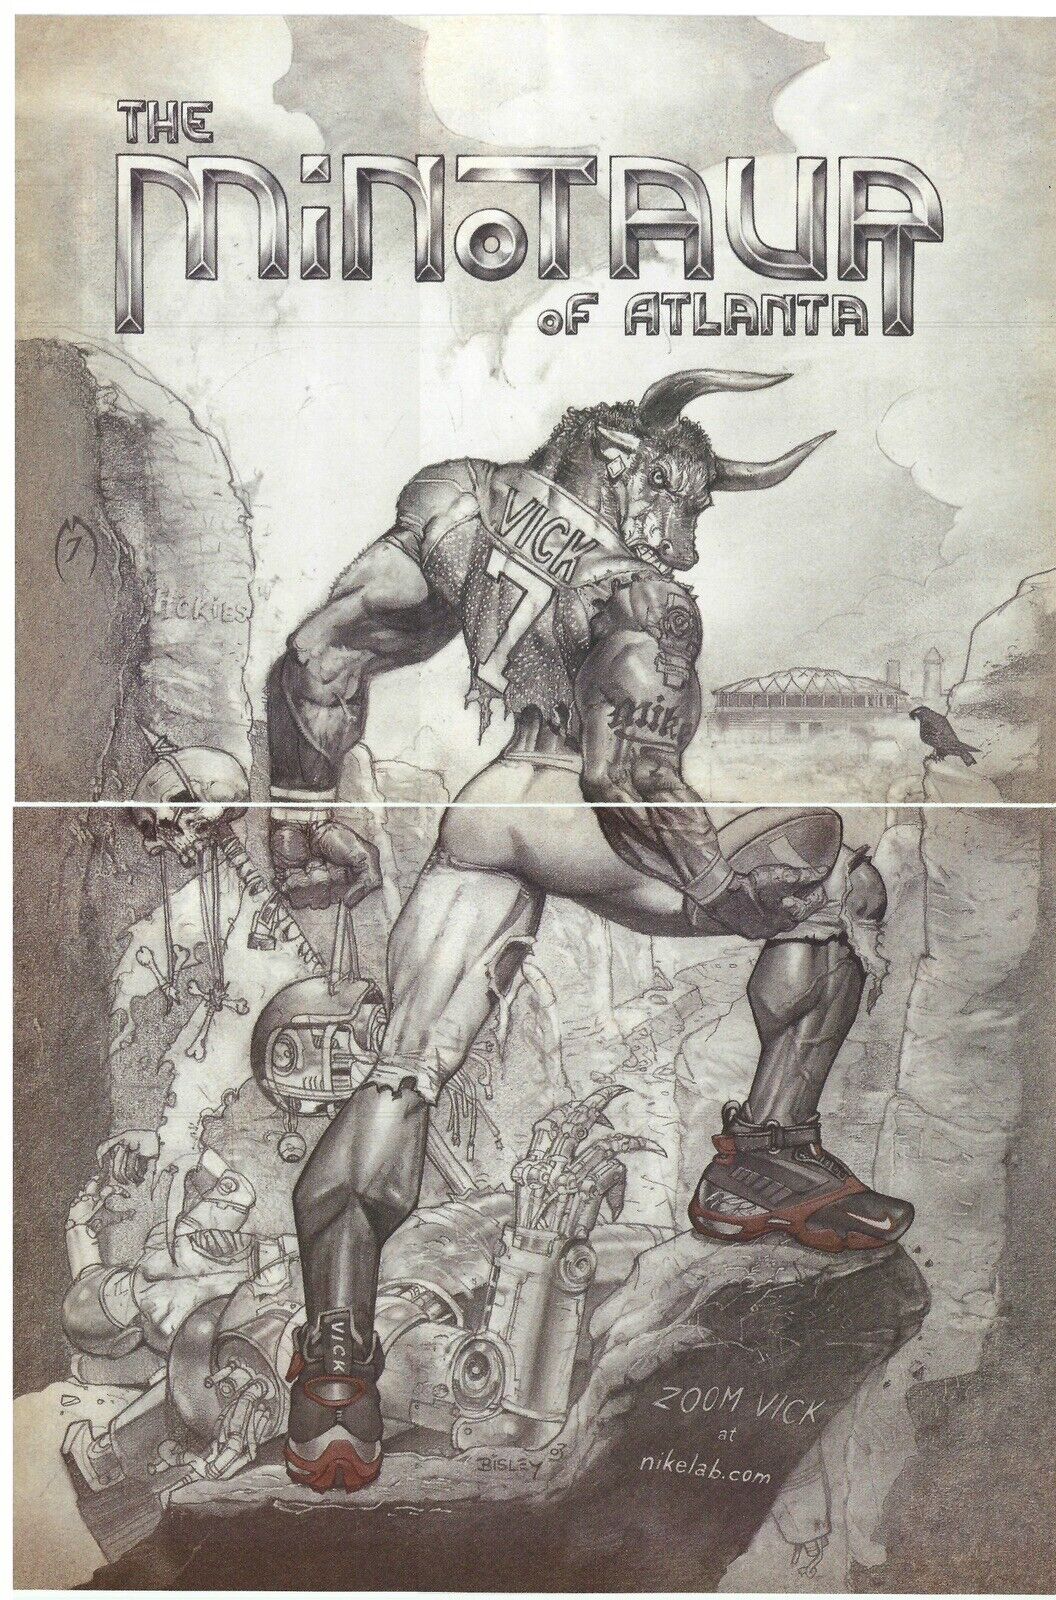 2004 Nike Lab Shoes The Minotaur of Atlanta Zoom Vick Retro Print Ad/Poster